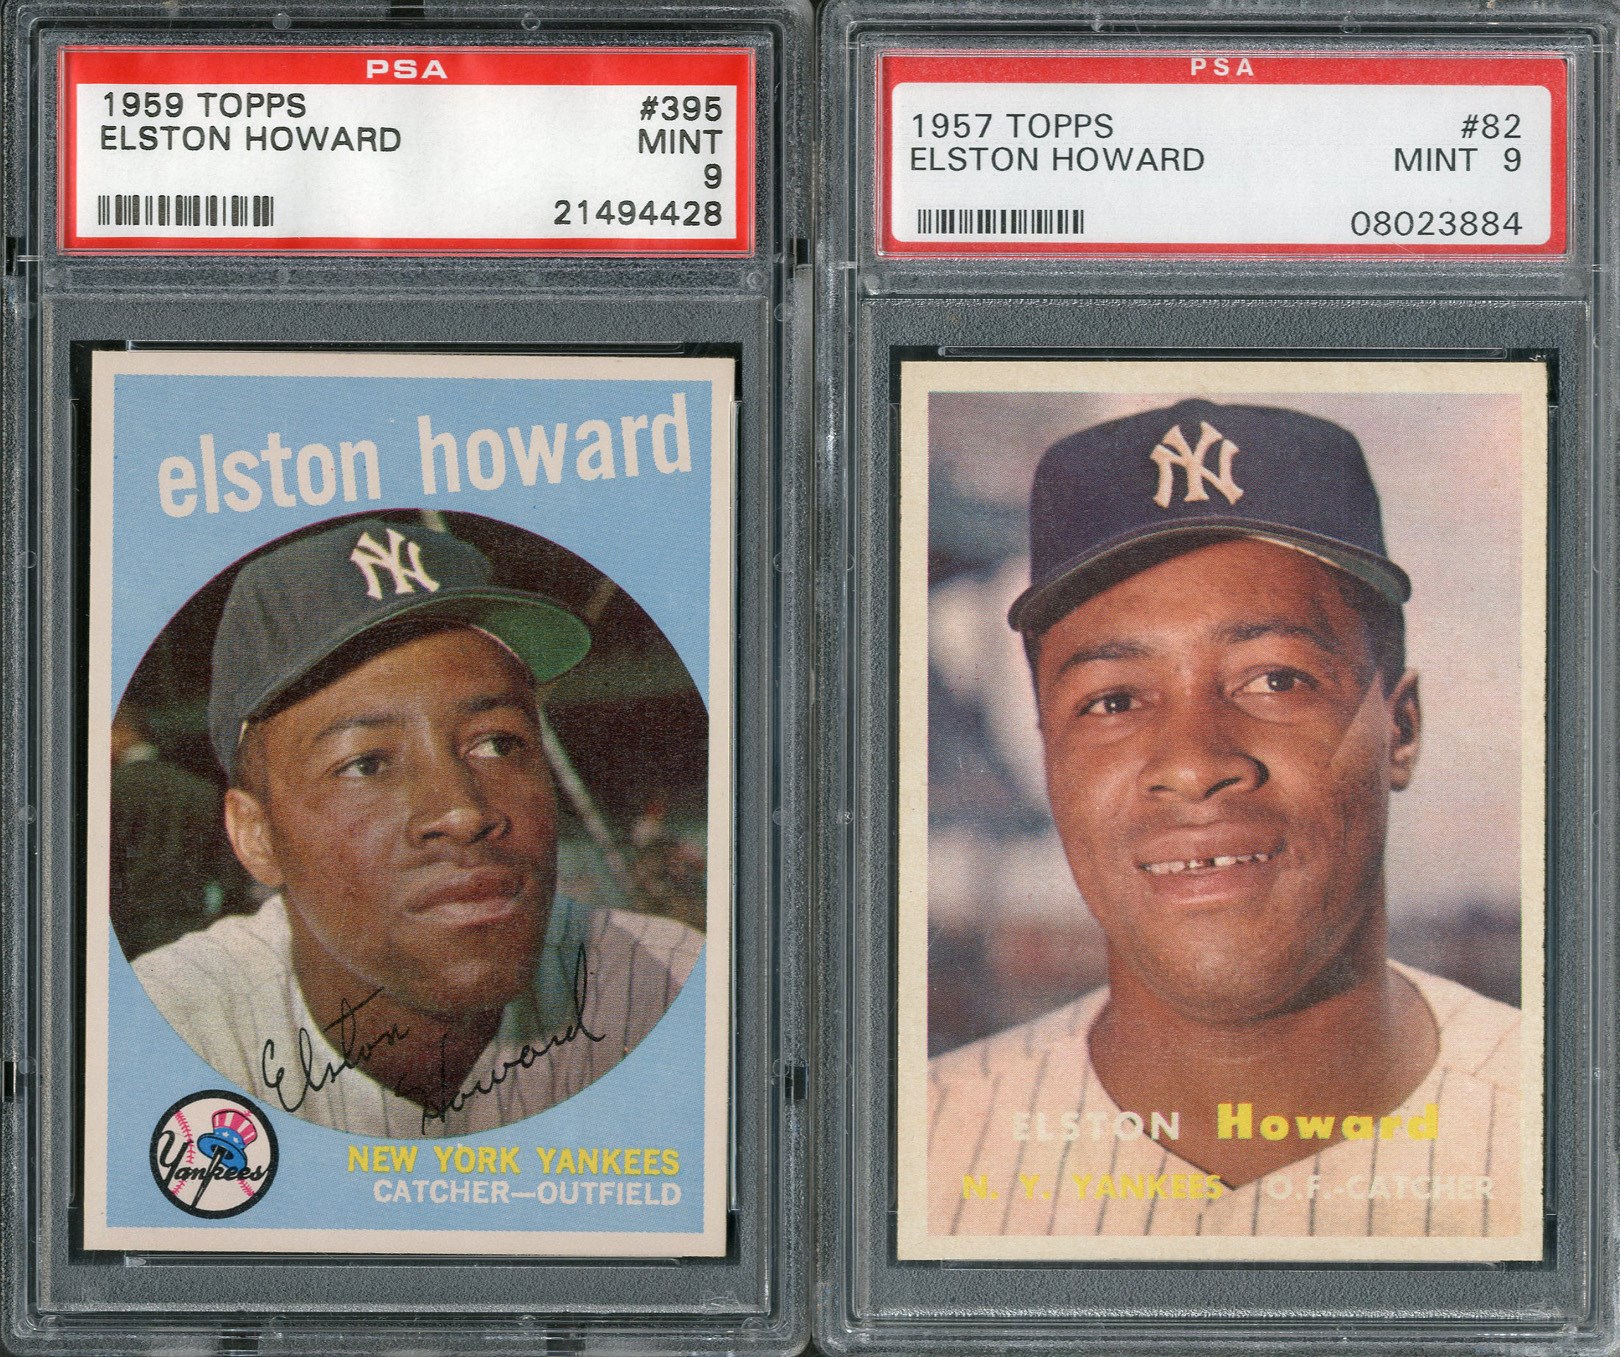 Baseball and Trading Cards - 1957 & 1959 Topps Elston Howard (Both PSA MINT 9)